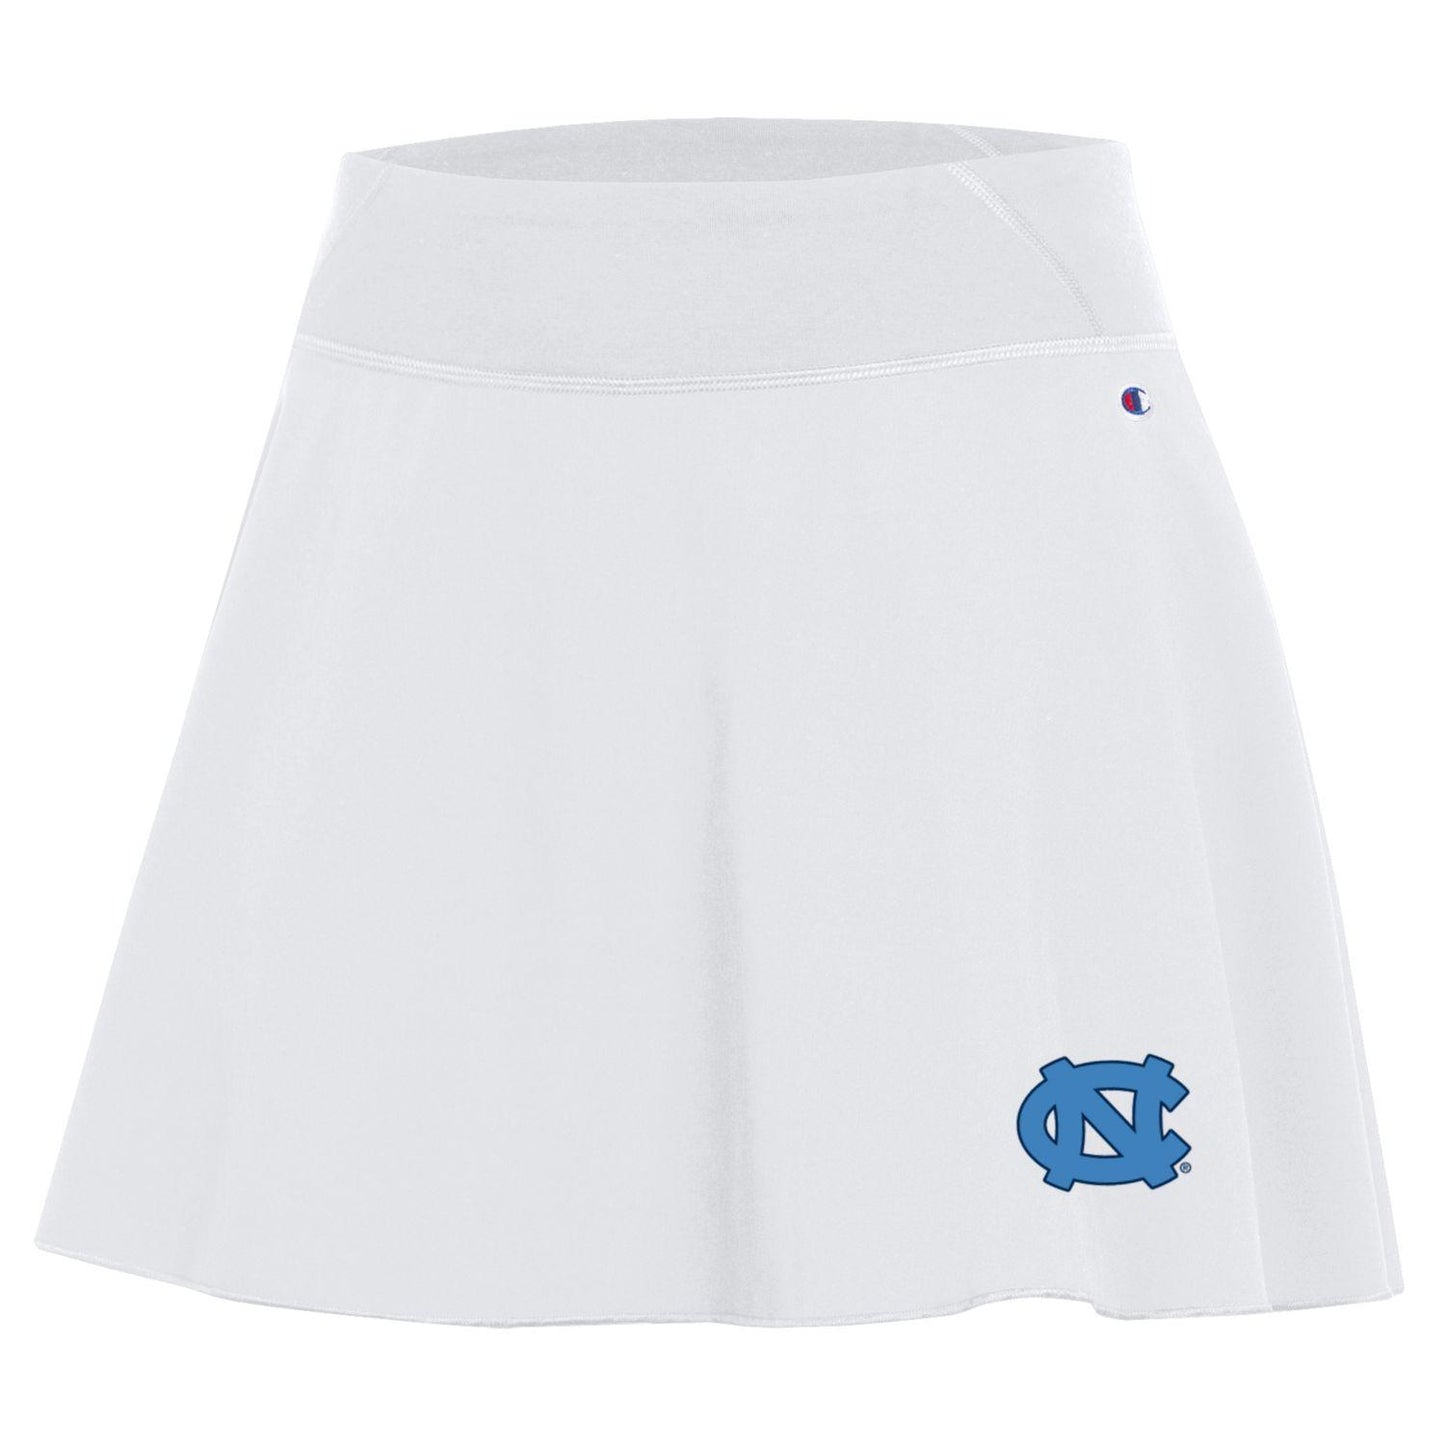 Carolina Tar Heels White Athletic Skirt with Shorts from Champion